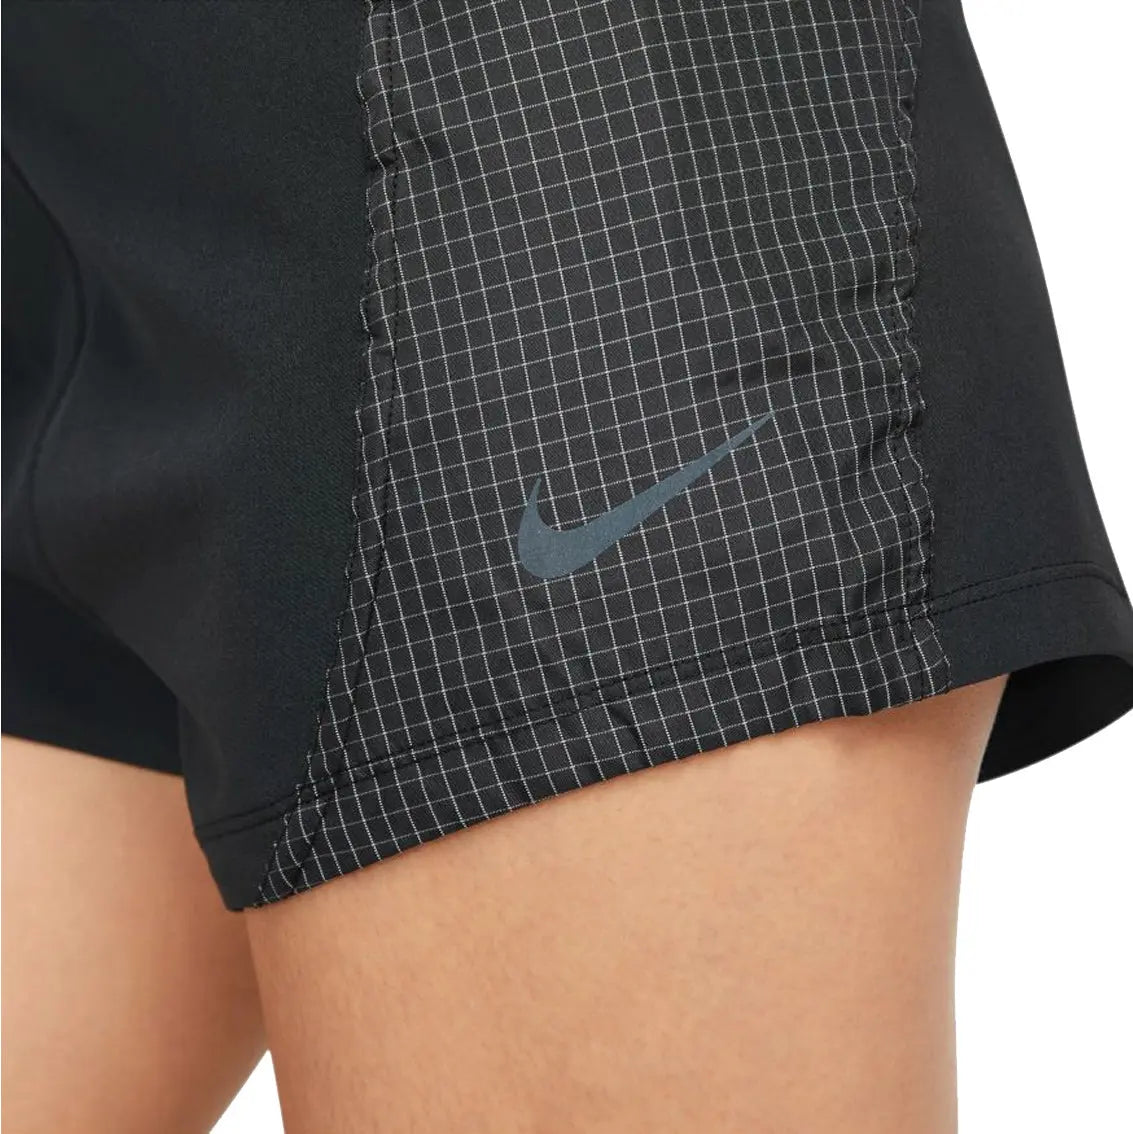 Womens Nike Dri-Fit Run Division Tempo Luxe Short - Black